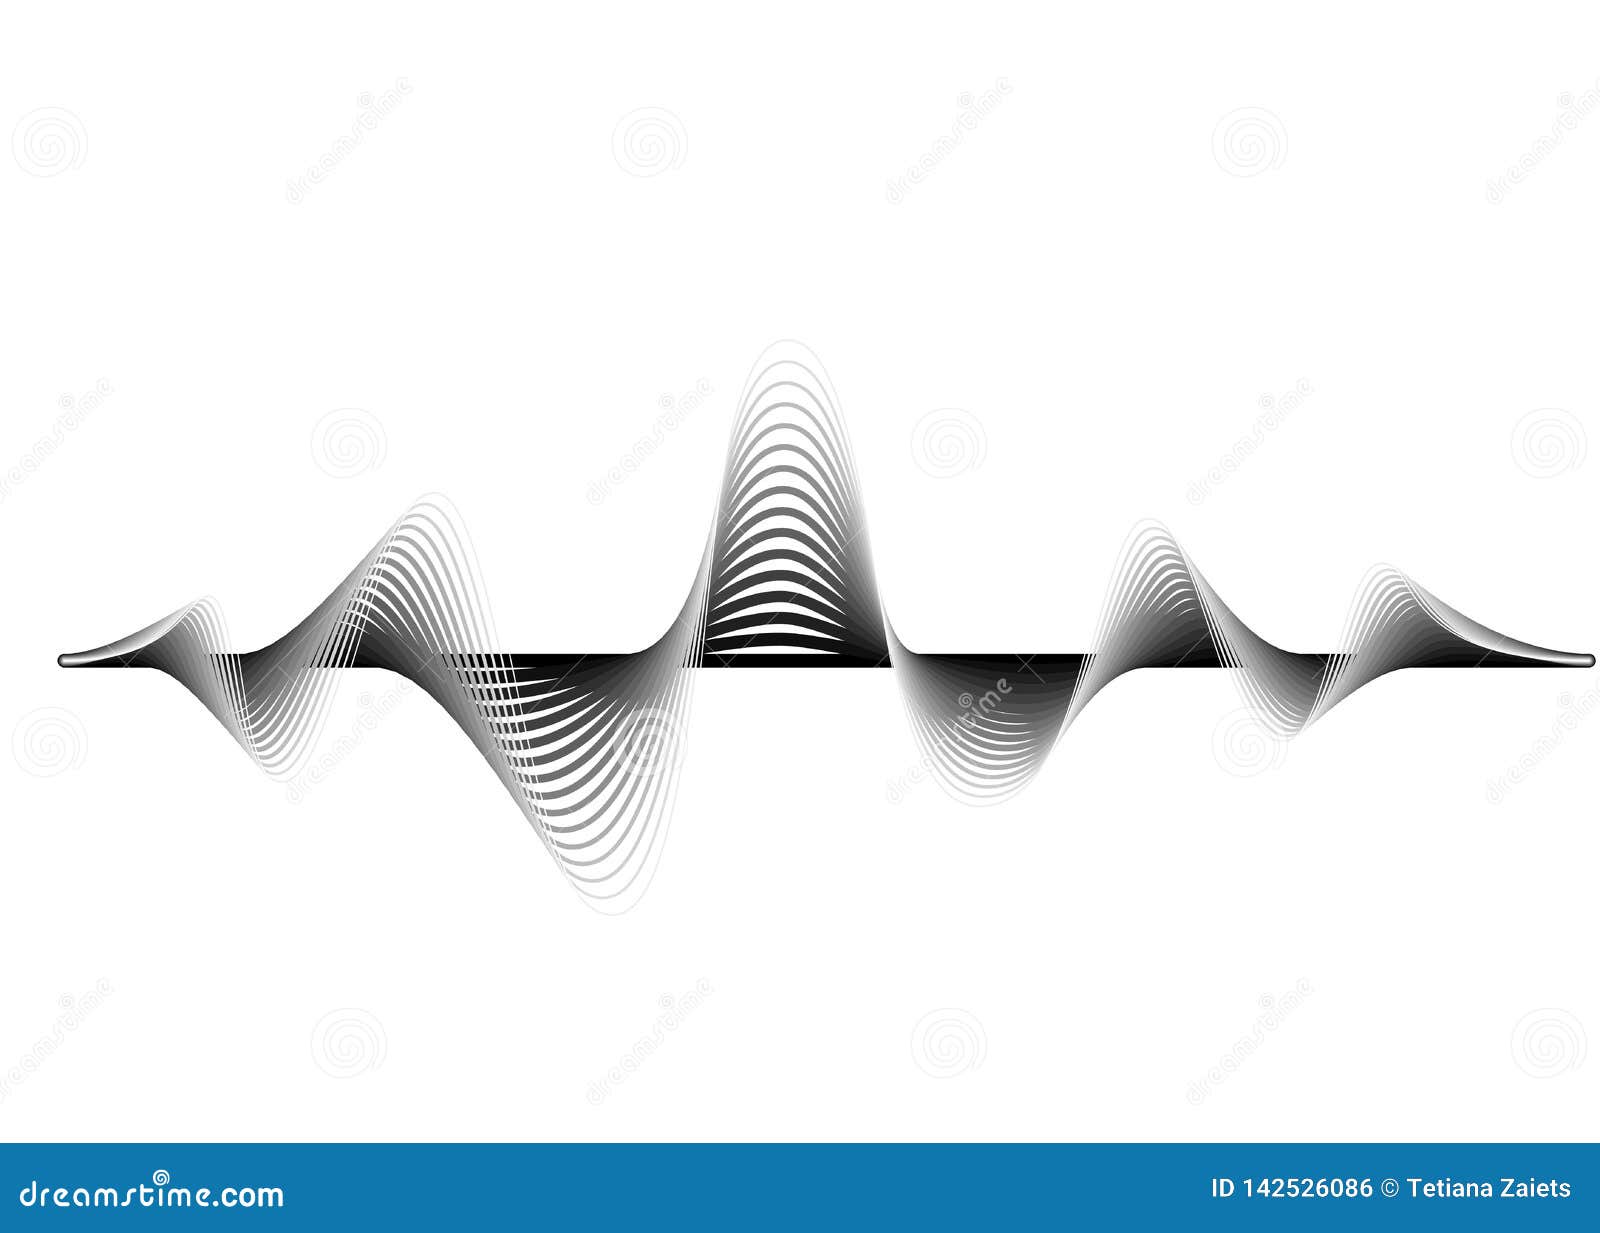 sound wave  background. audio music soundwave. voice frequency form . vibration beats in waveform